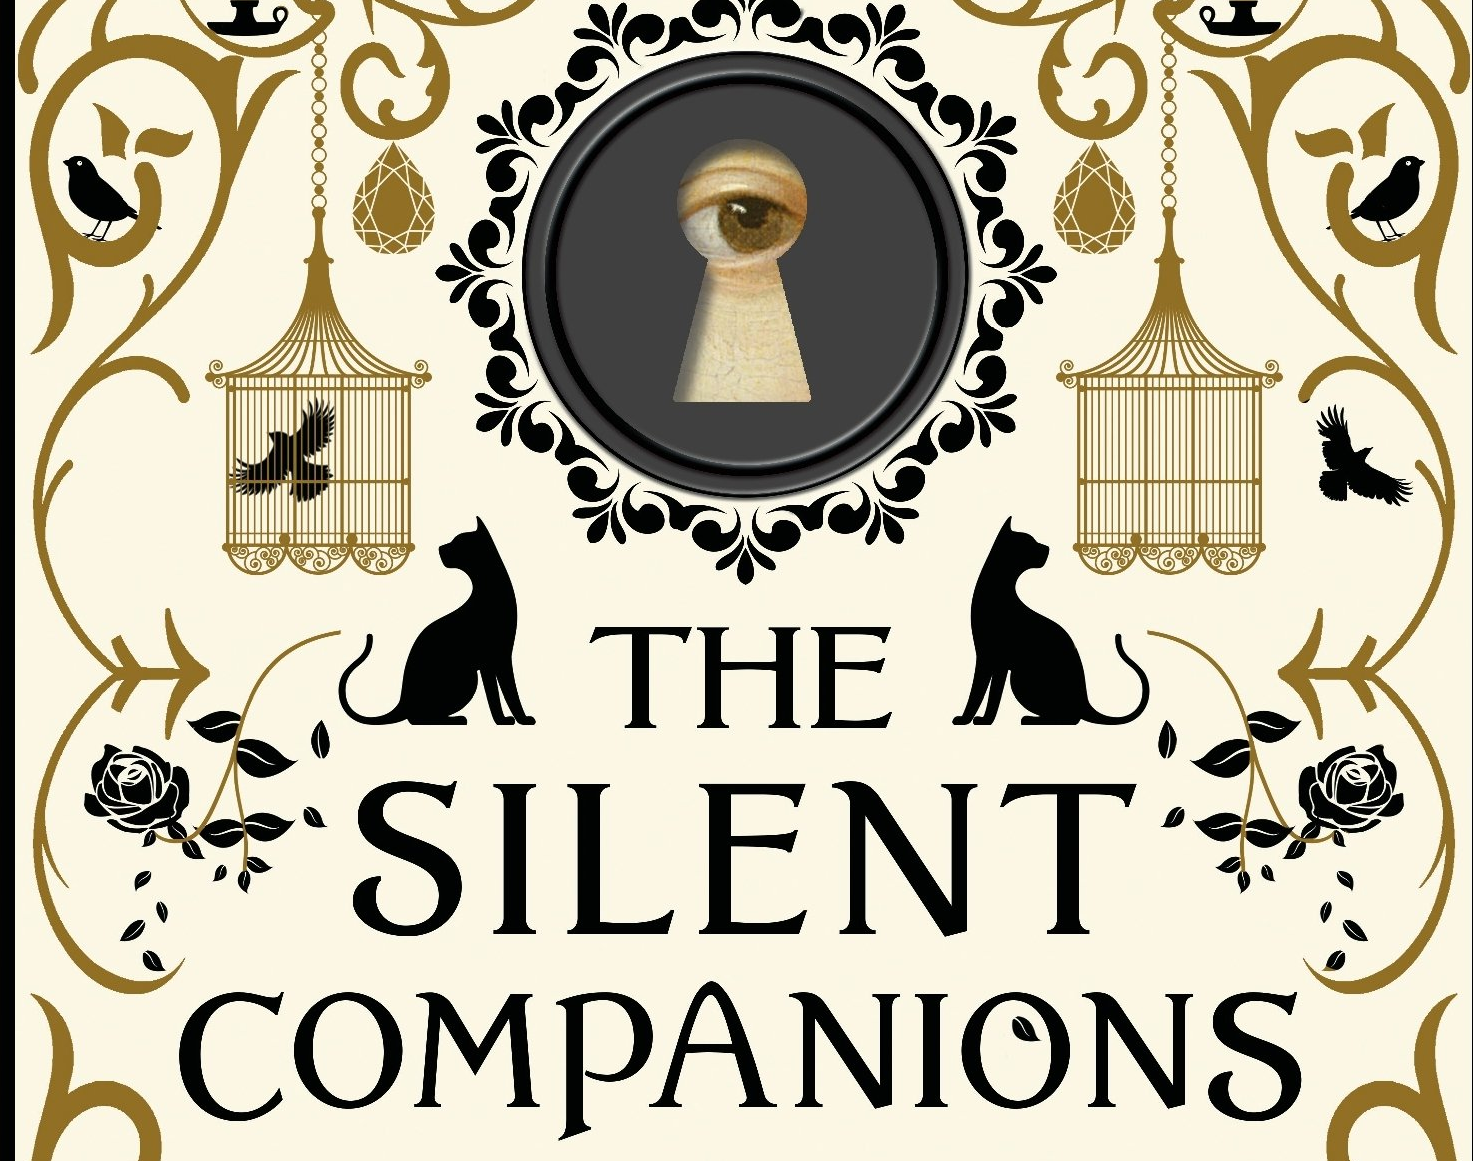 the silent companions book